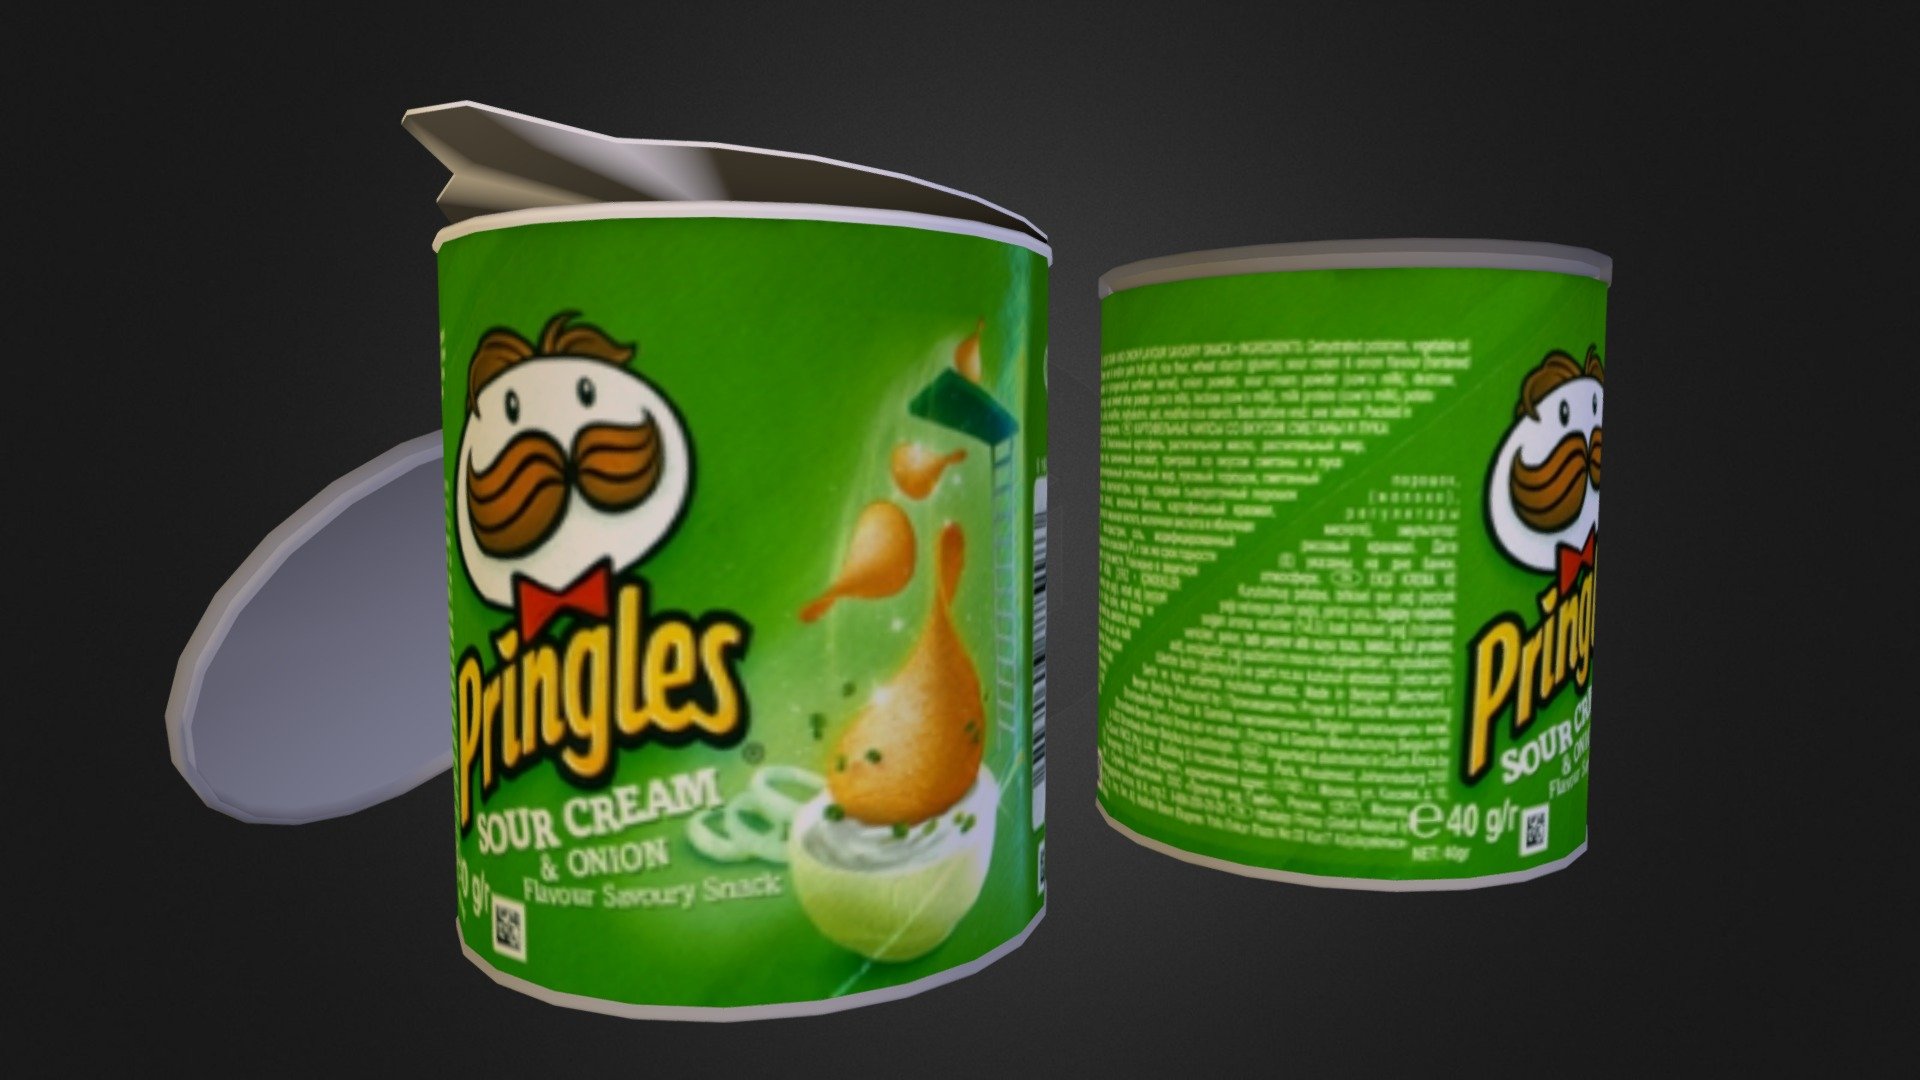 Pringles Chips. Download -   -link removed- - Pringles Chips - 3D model by planetstation 3d model